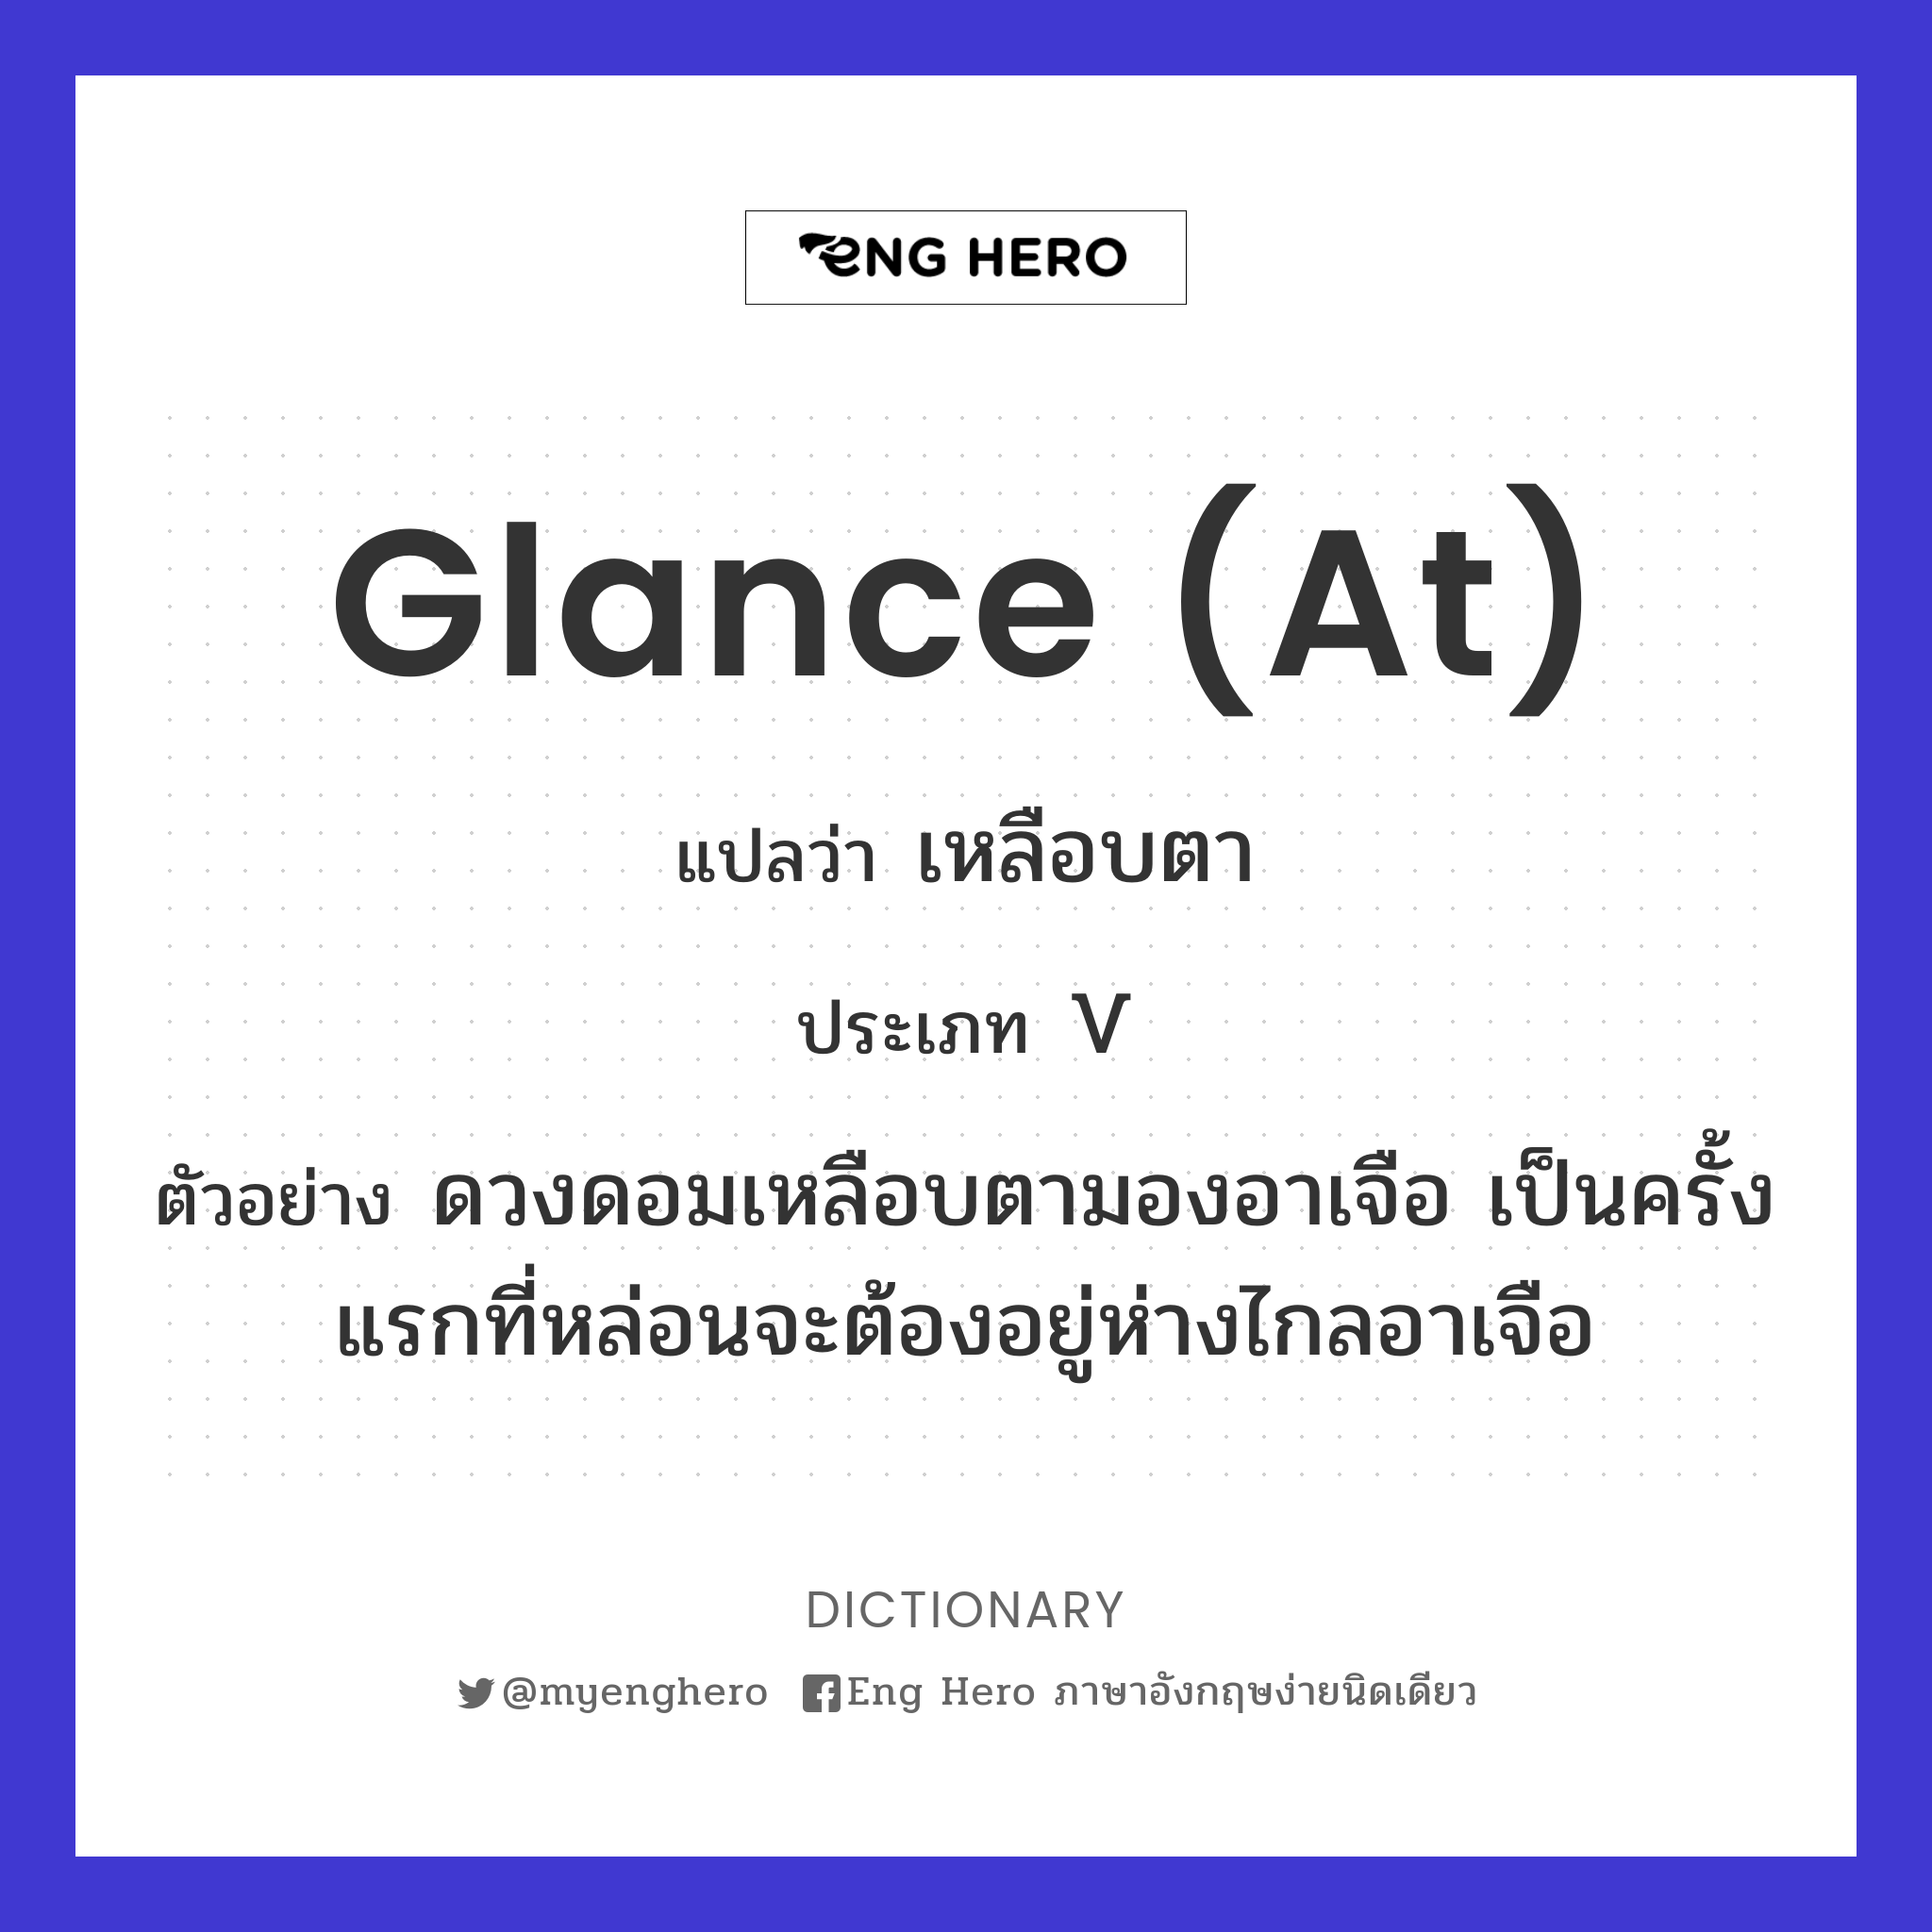 glance (at)